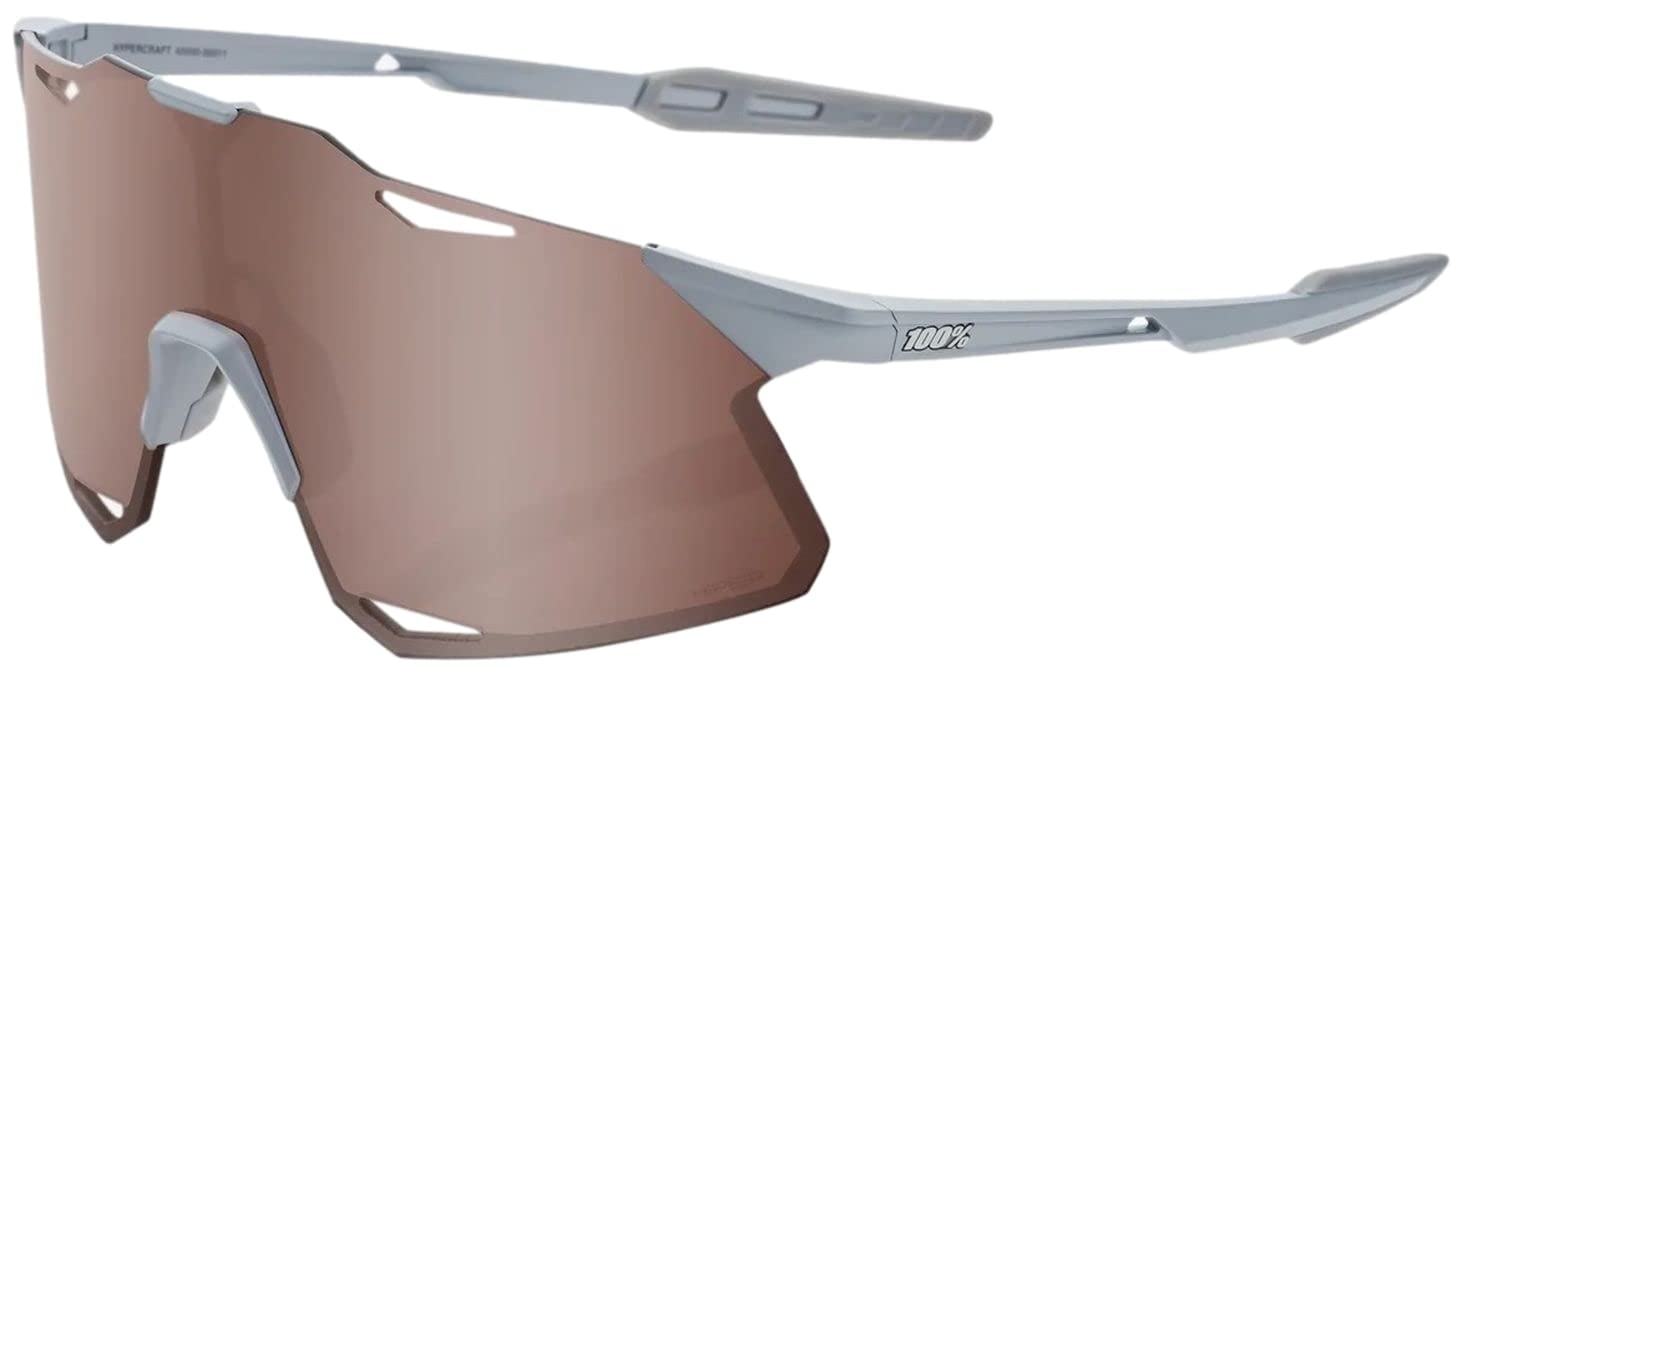 100% Hypercraft Sunglasses - Matte Stone Grey; Hiper Crimson Silver Mirror